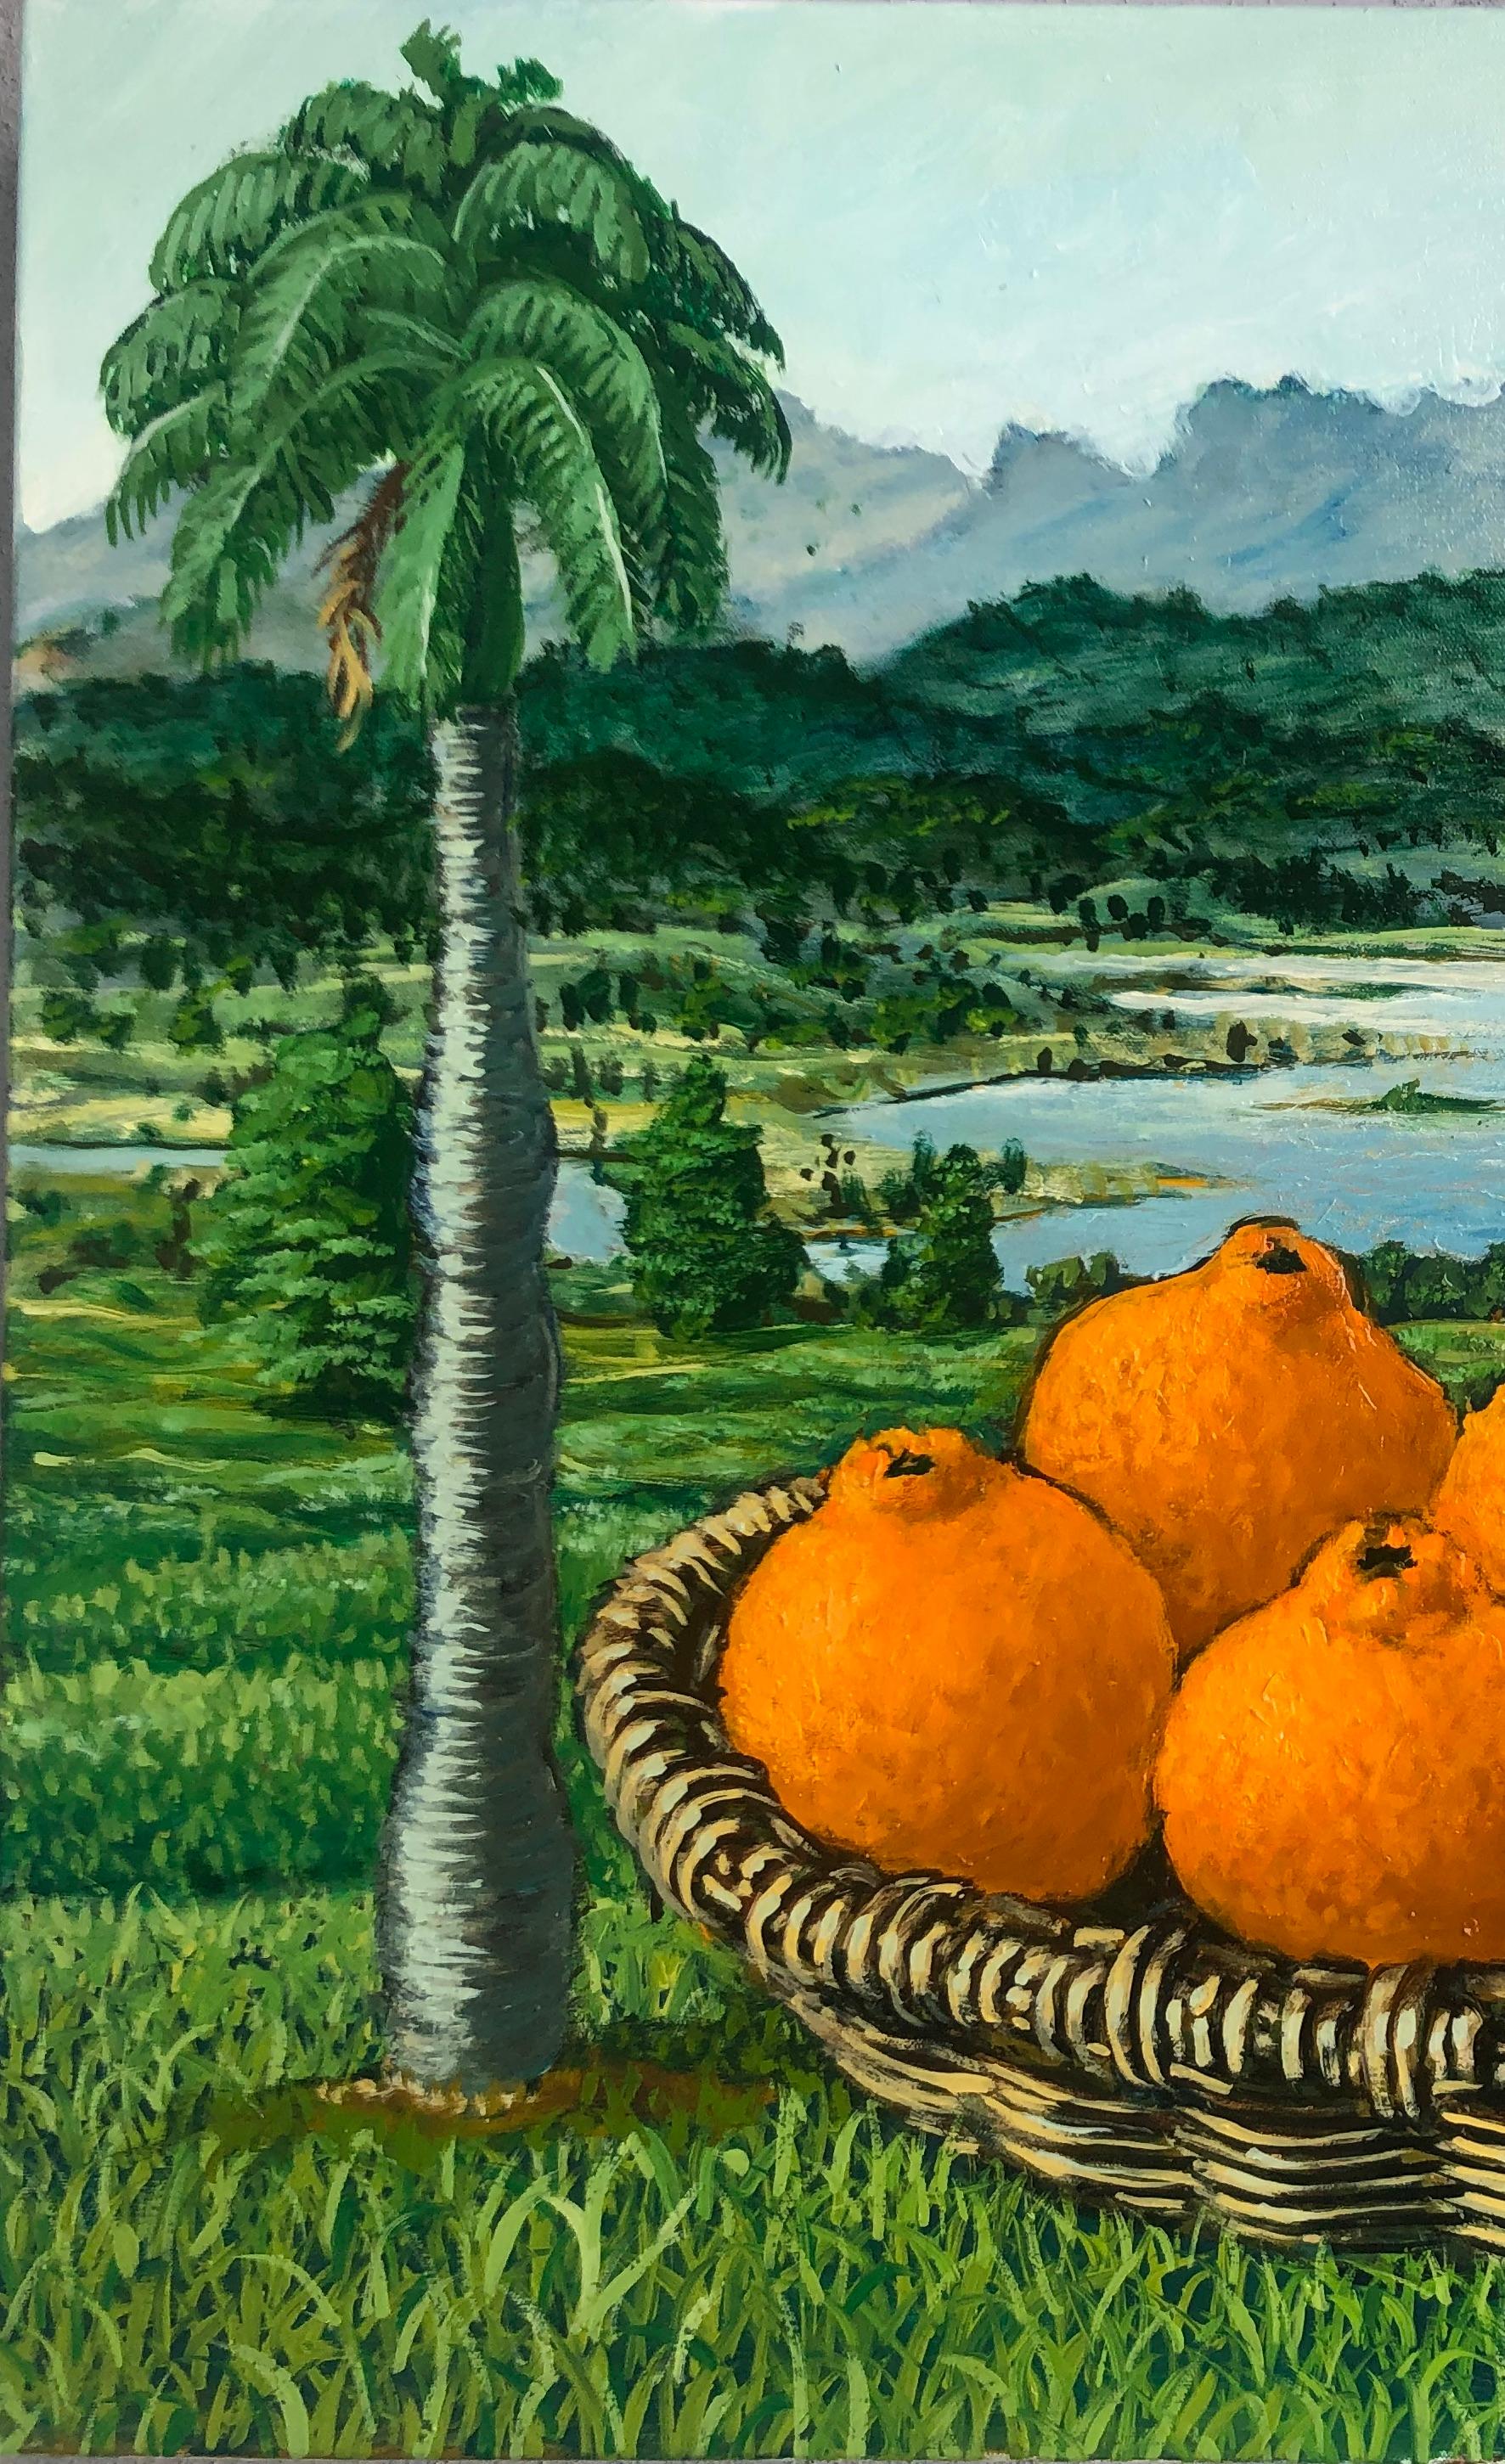 Oranges In The Basket Between Palm Trees - Painting by Rafael Saldarriaga